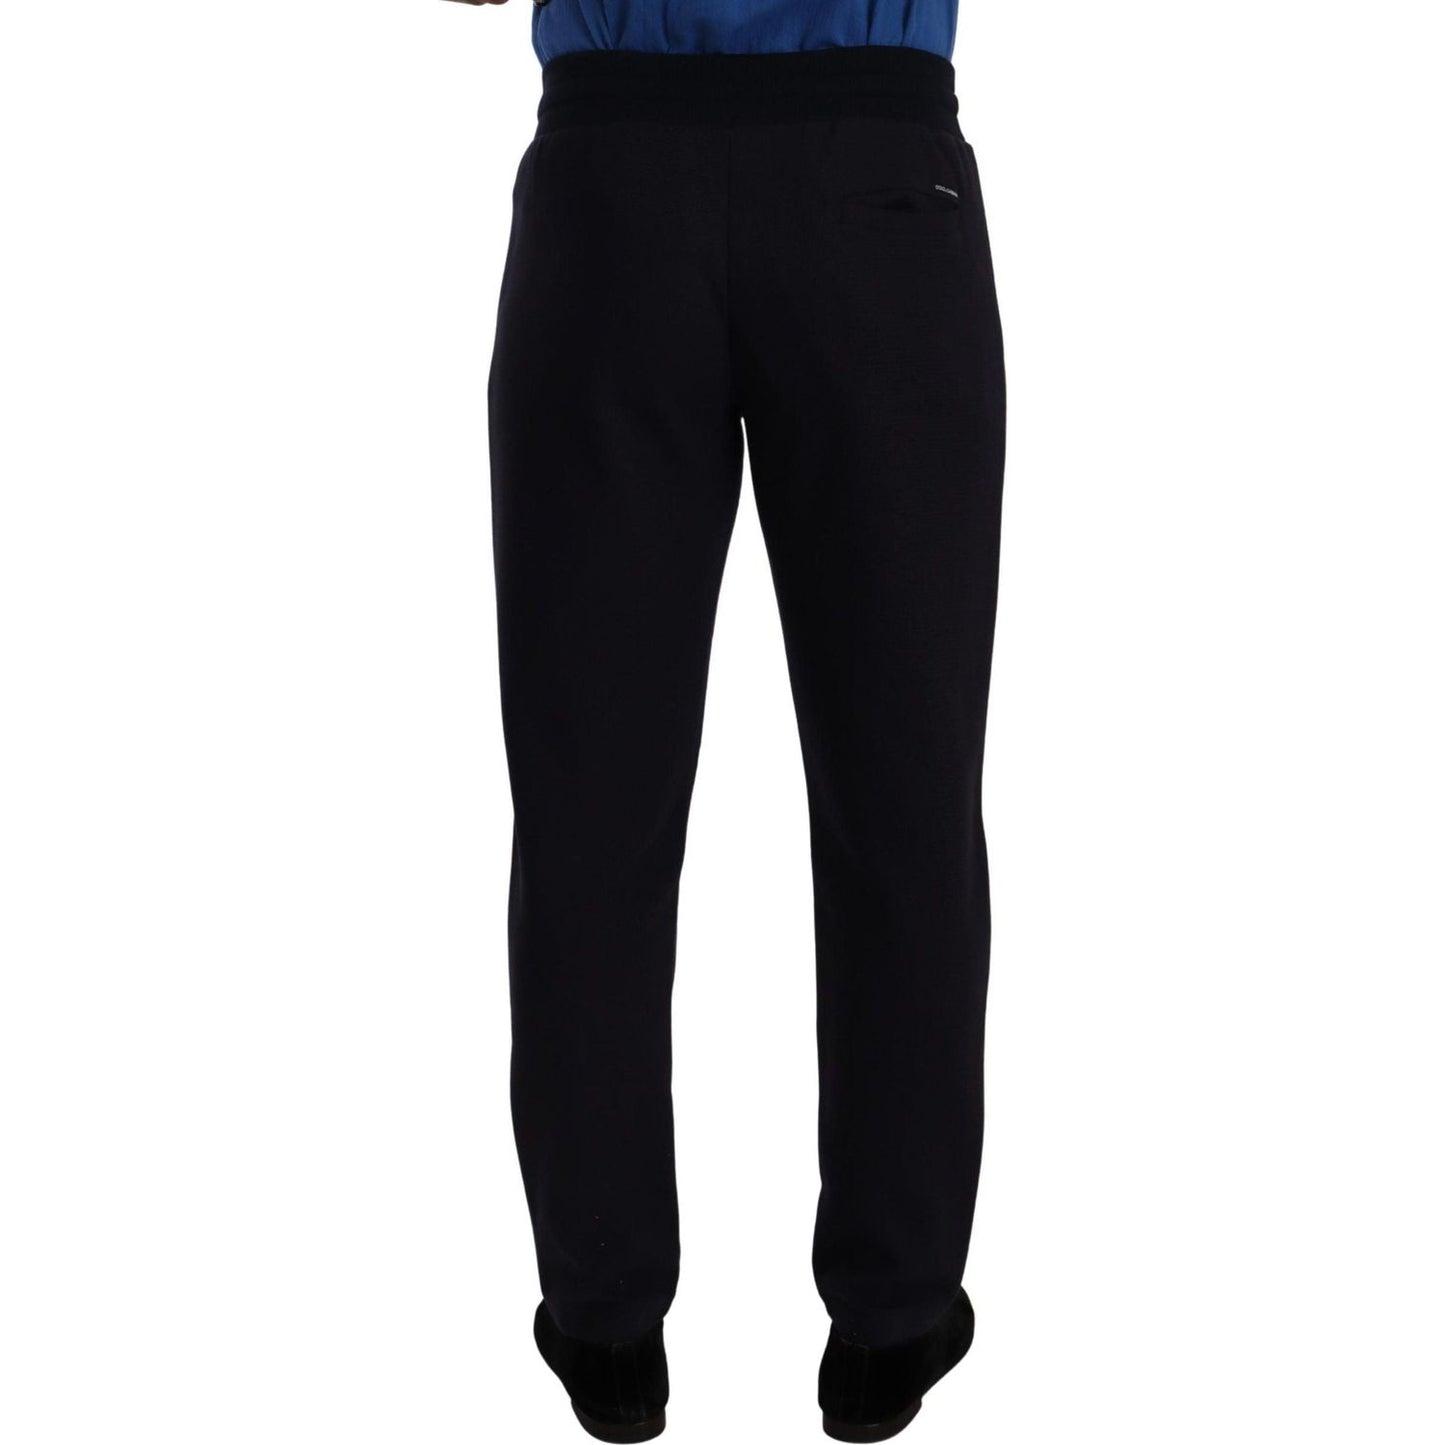 Dolce & Gabbana Elegant Blue Jogger Pants for Men blue-cotton-stretch-jogging-trouser-pants